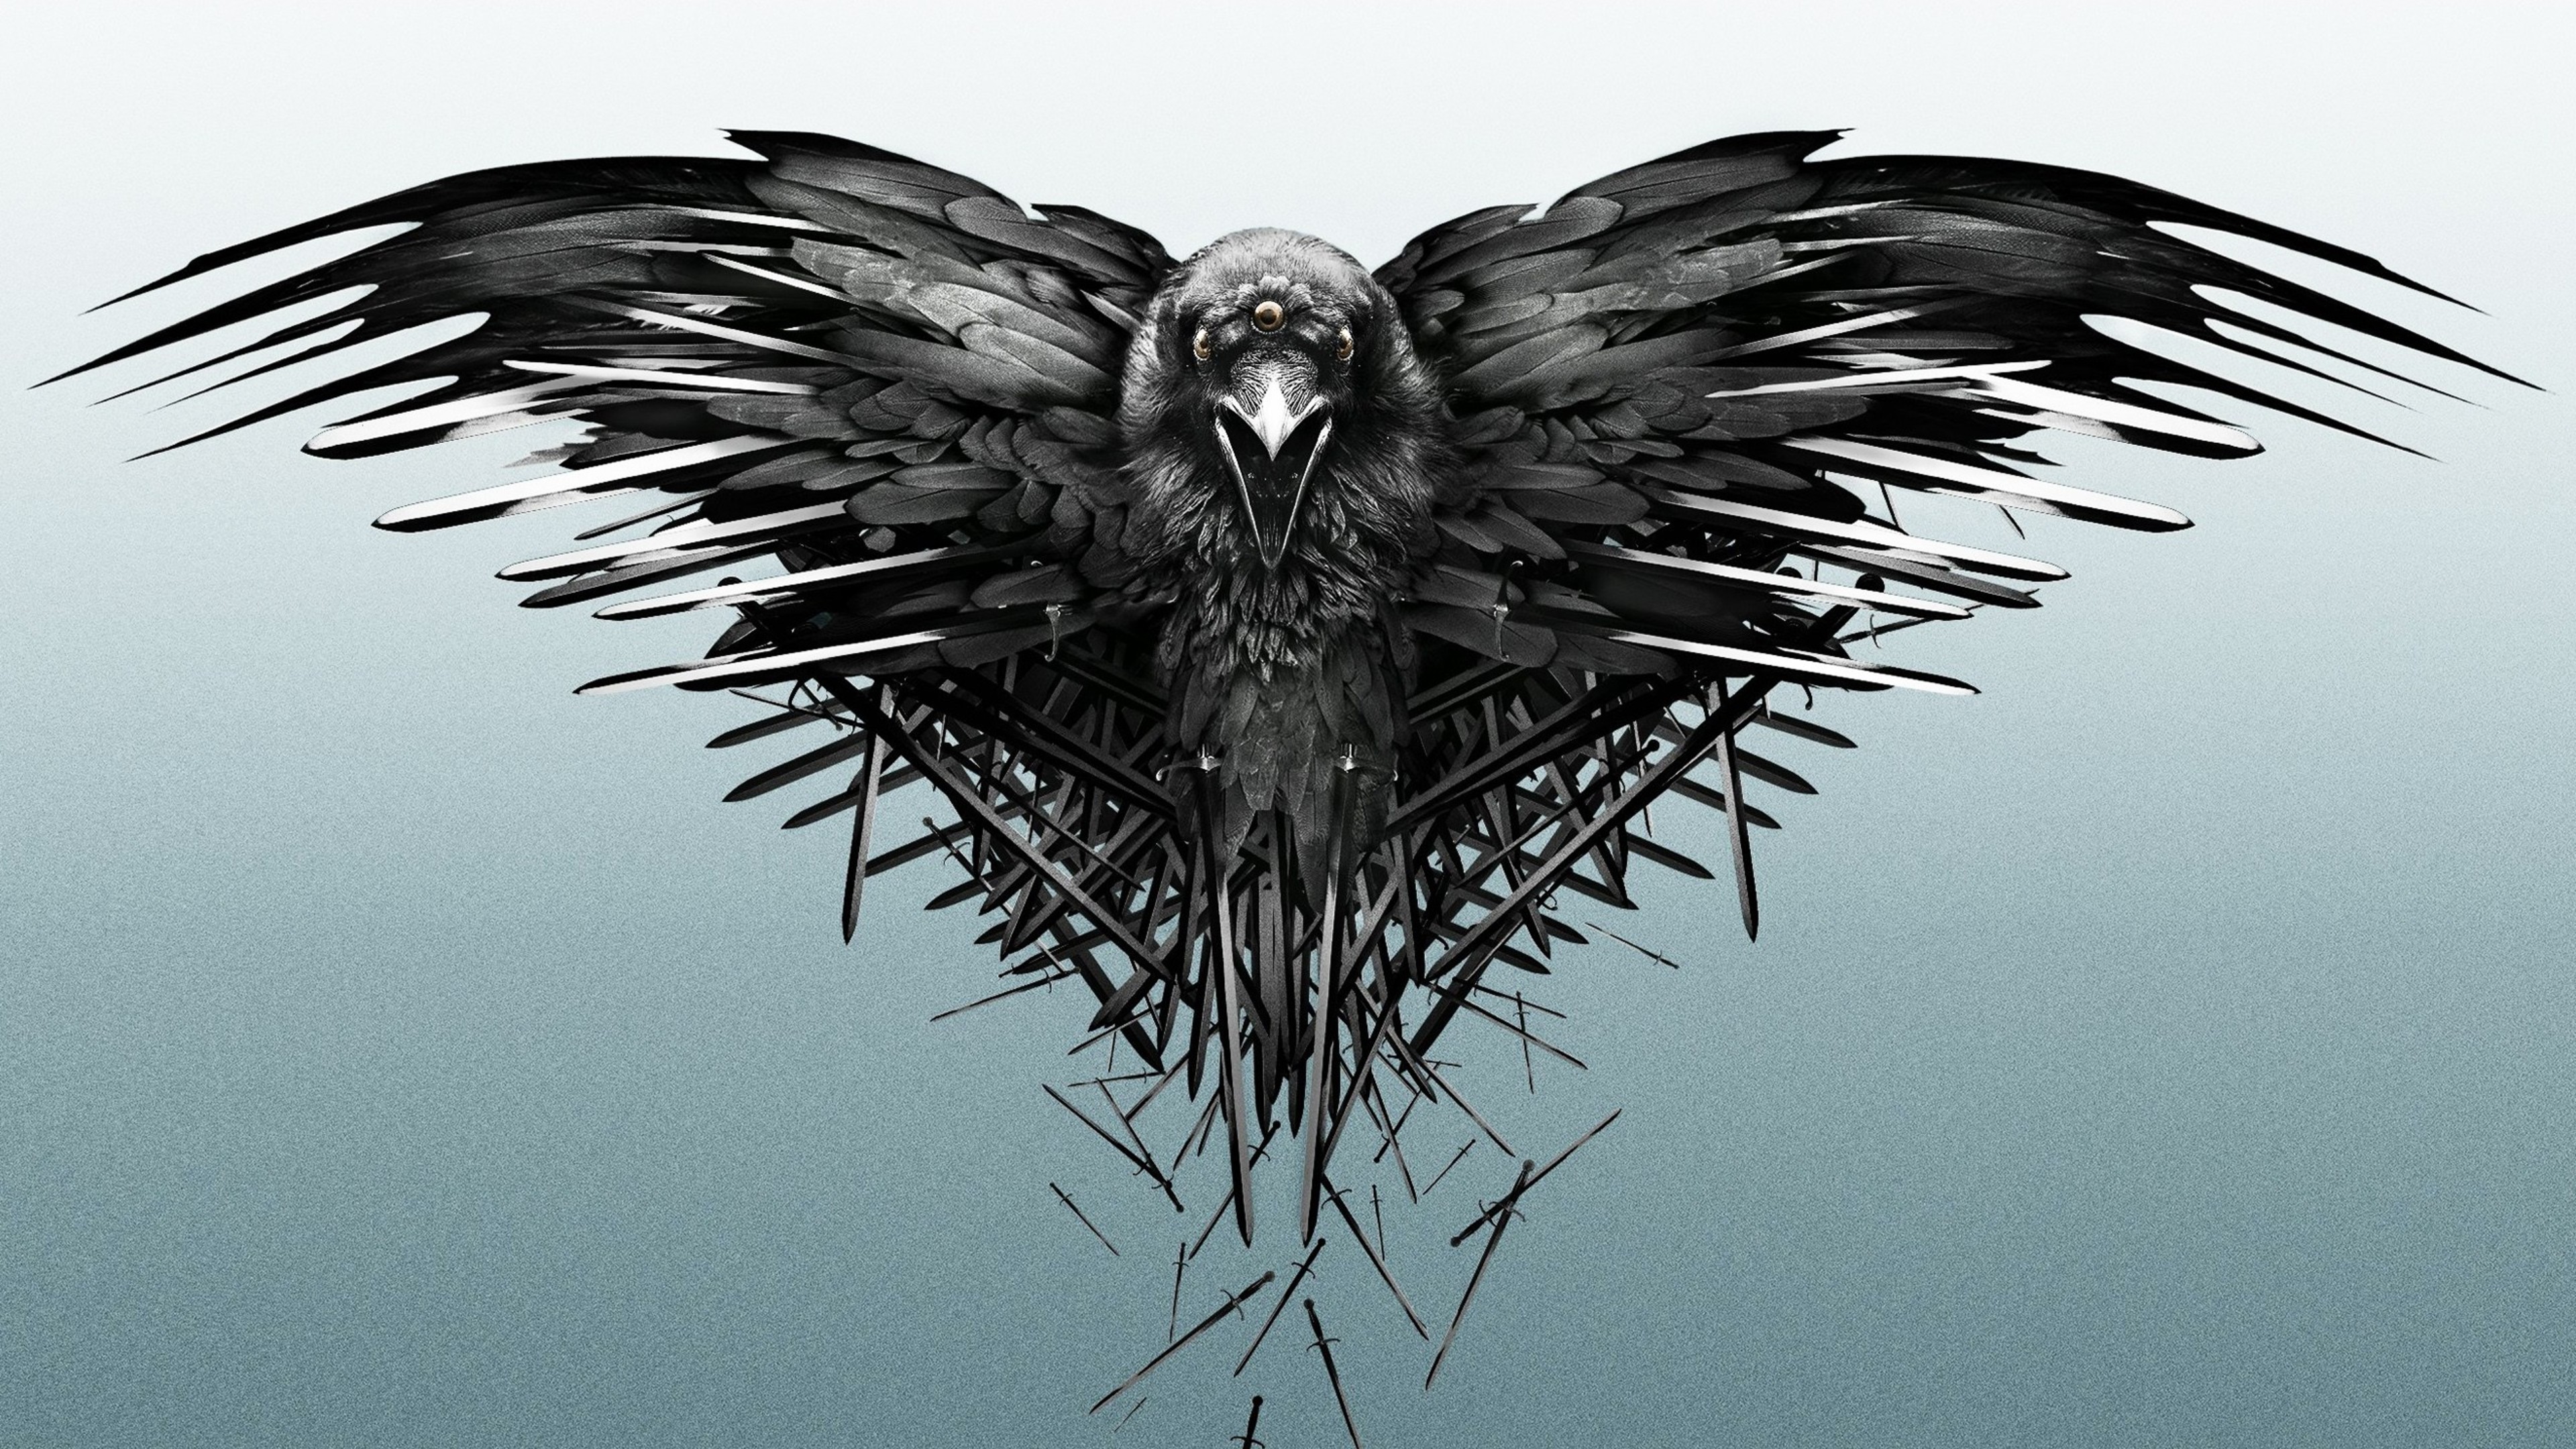 Game Of Thrones Raven, HD Tv Shows, 4k Wallpaper, Image